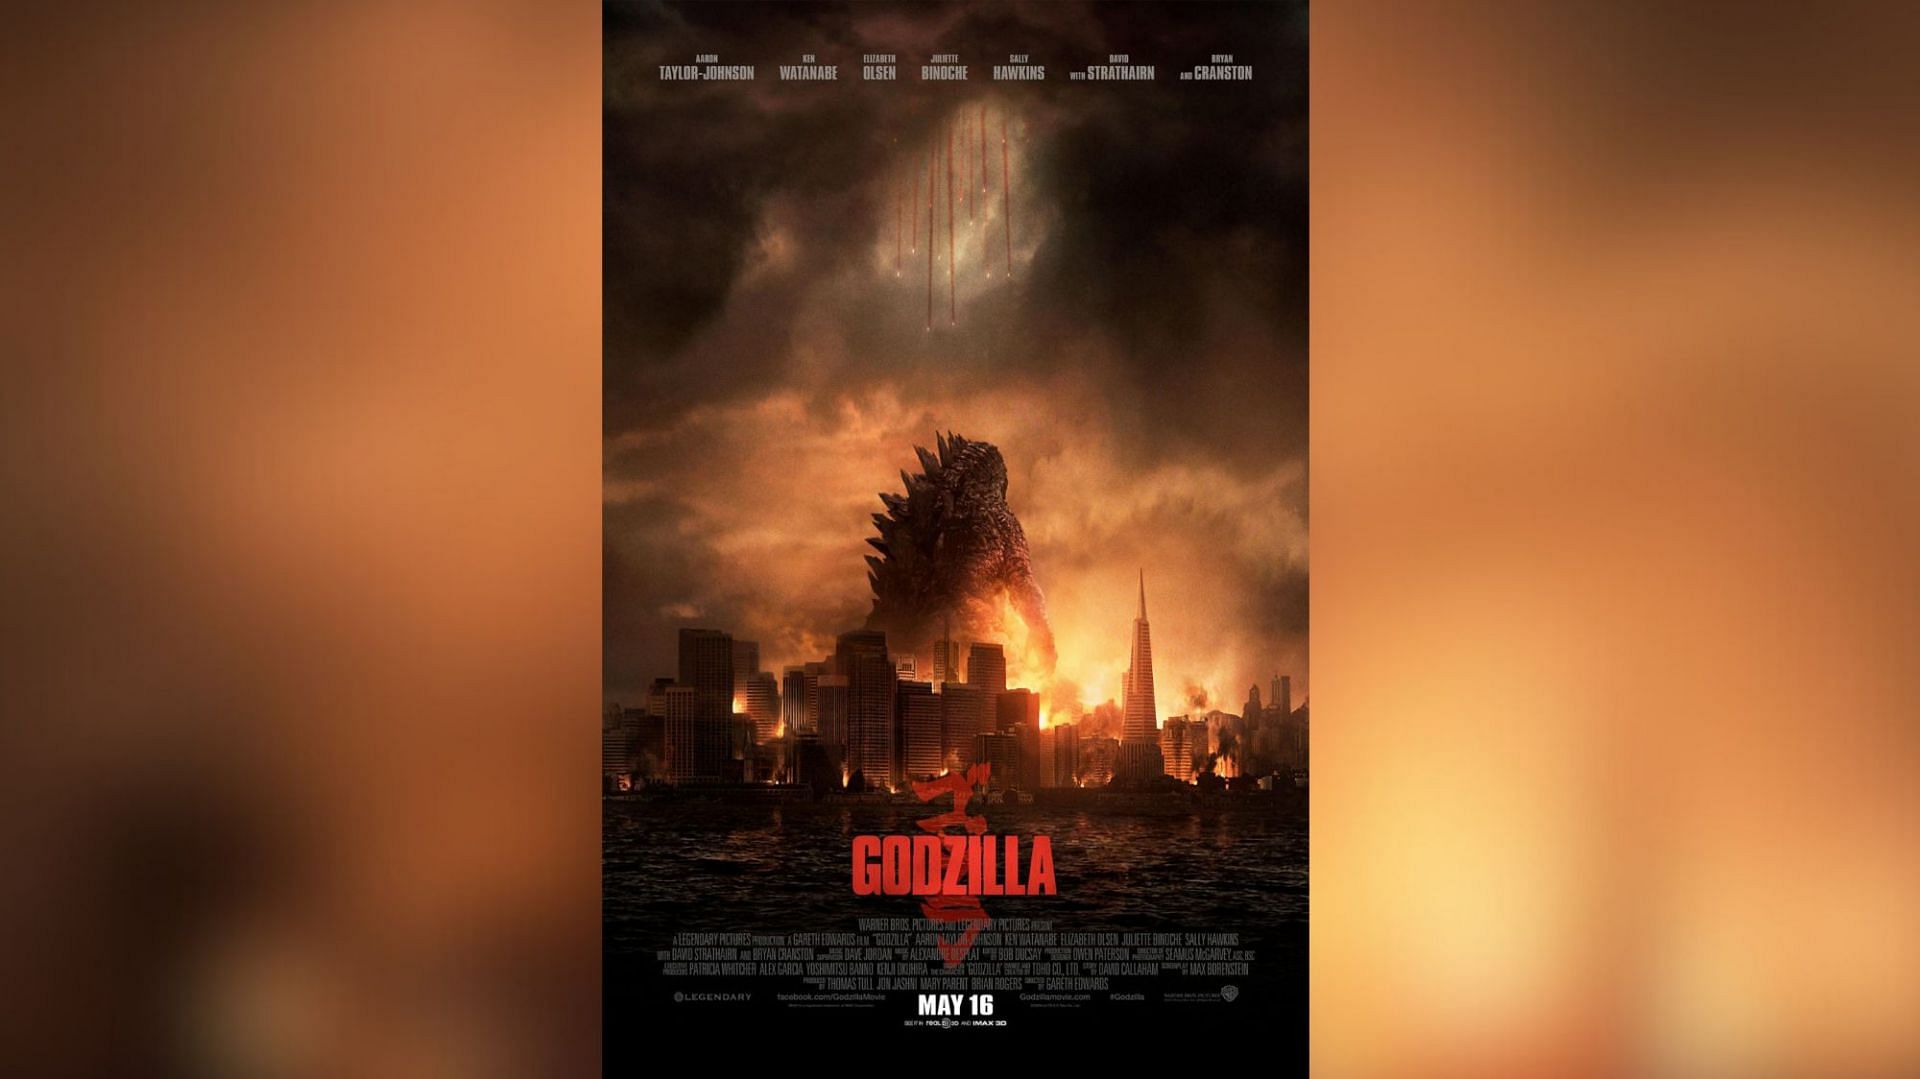 Godzilla, 2014 (Image via Warner Bros. Pictures)